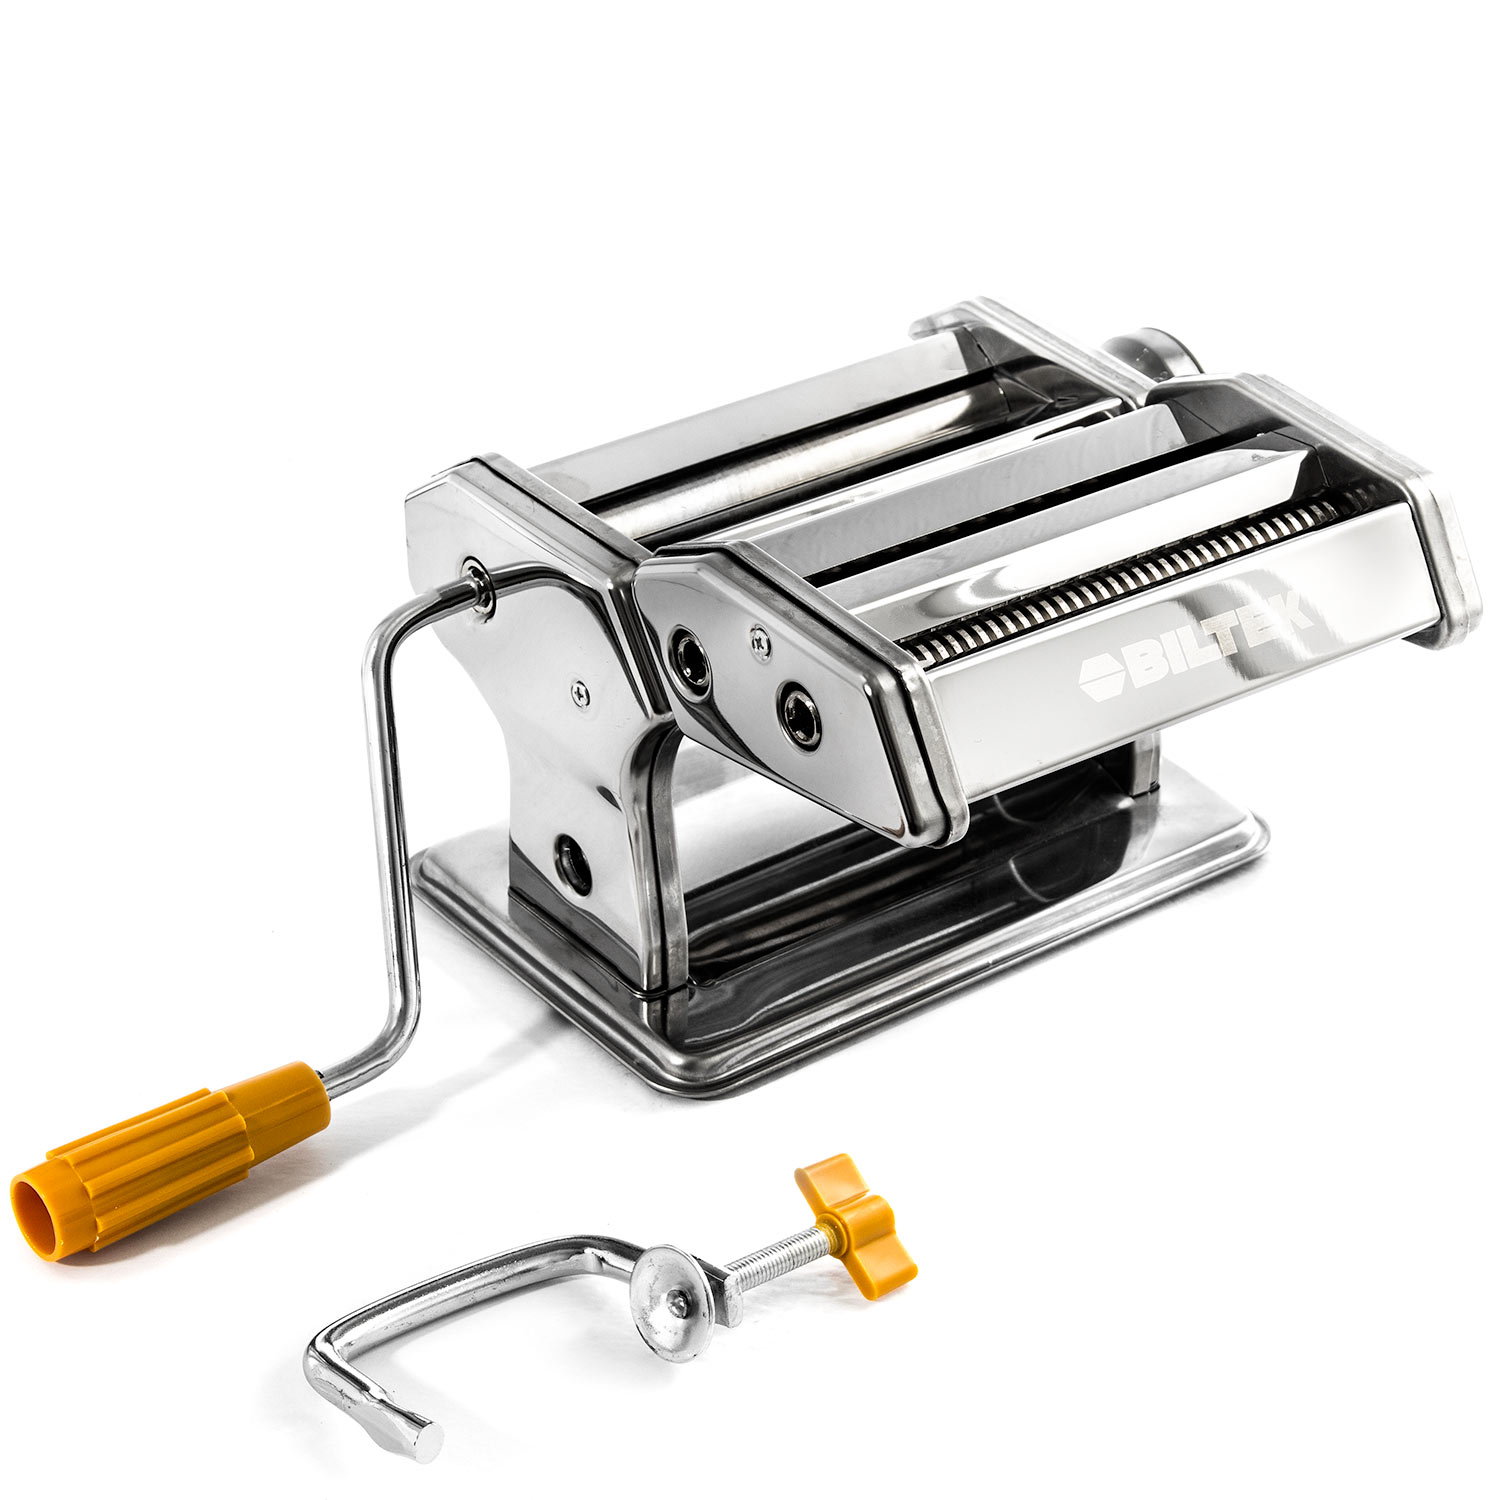 Biltek Pasta Maker Machine - Stainless Steel Hand Crank Cutter